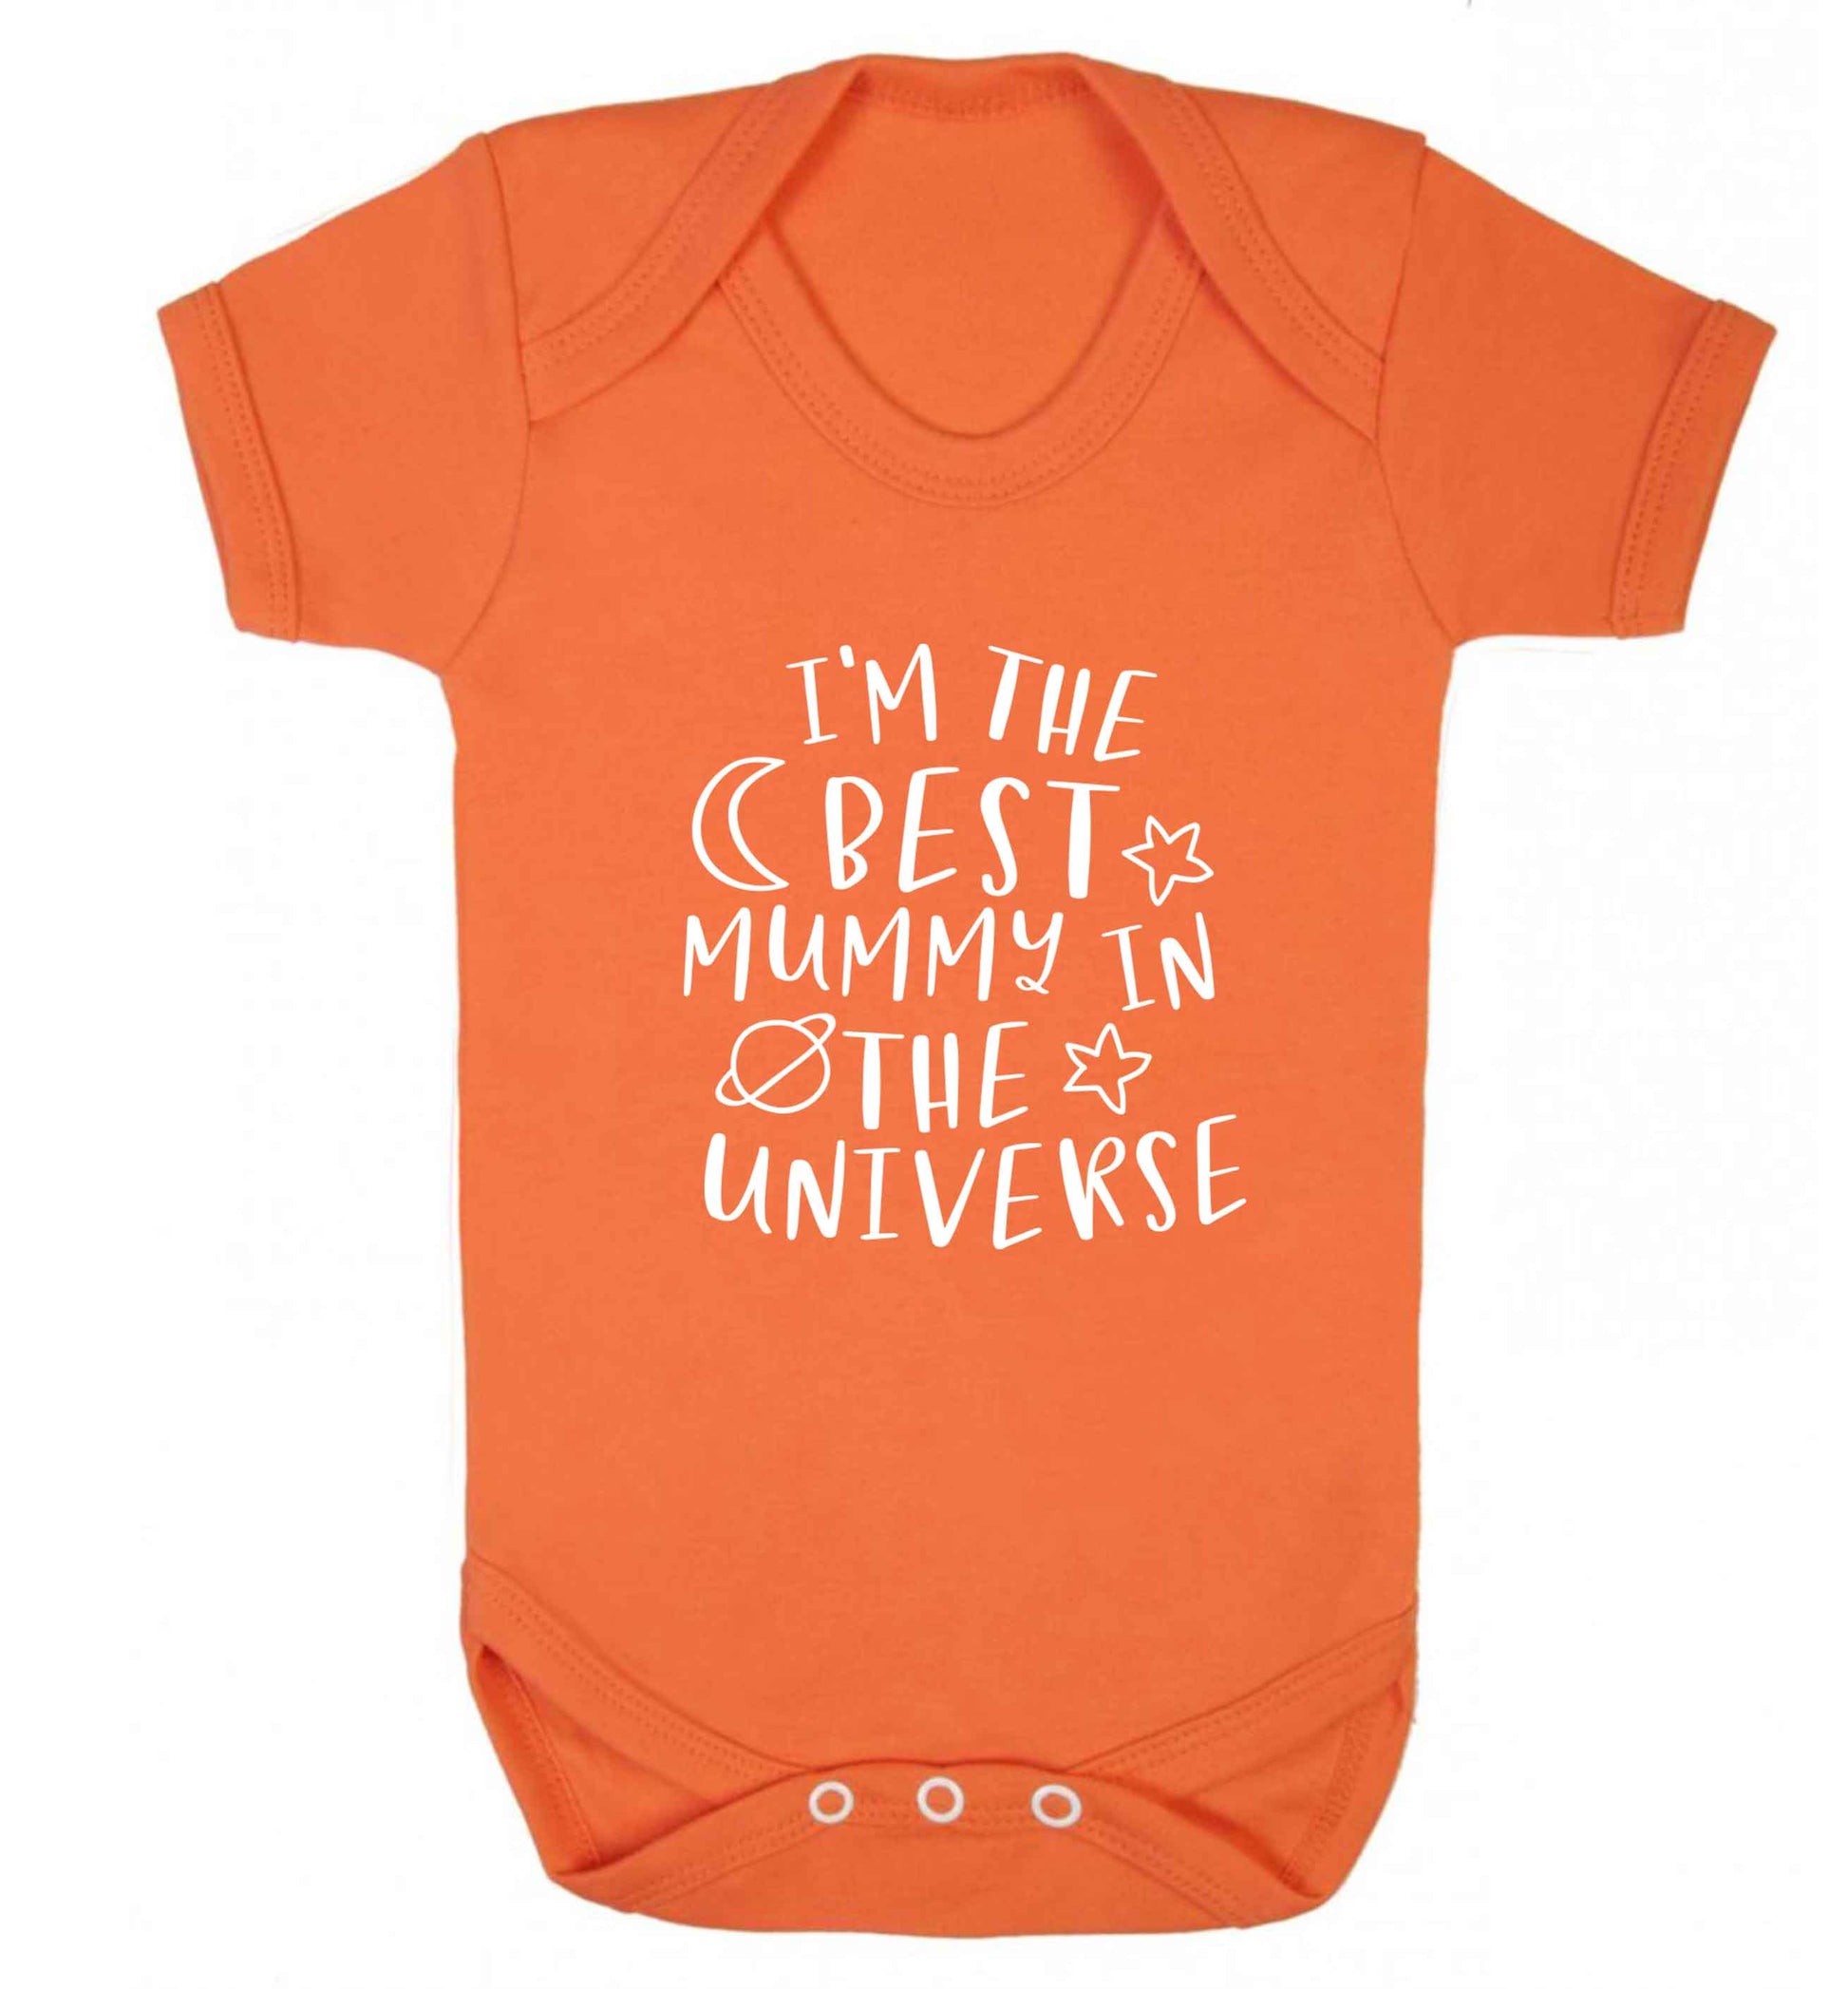 I'm the best mummy in the universe baby vest orange 18-24 months